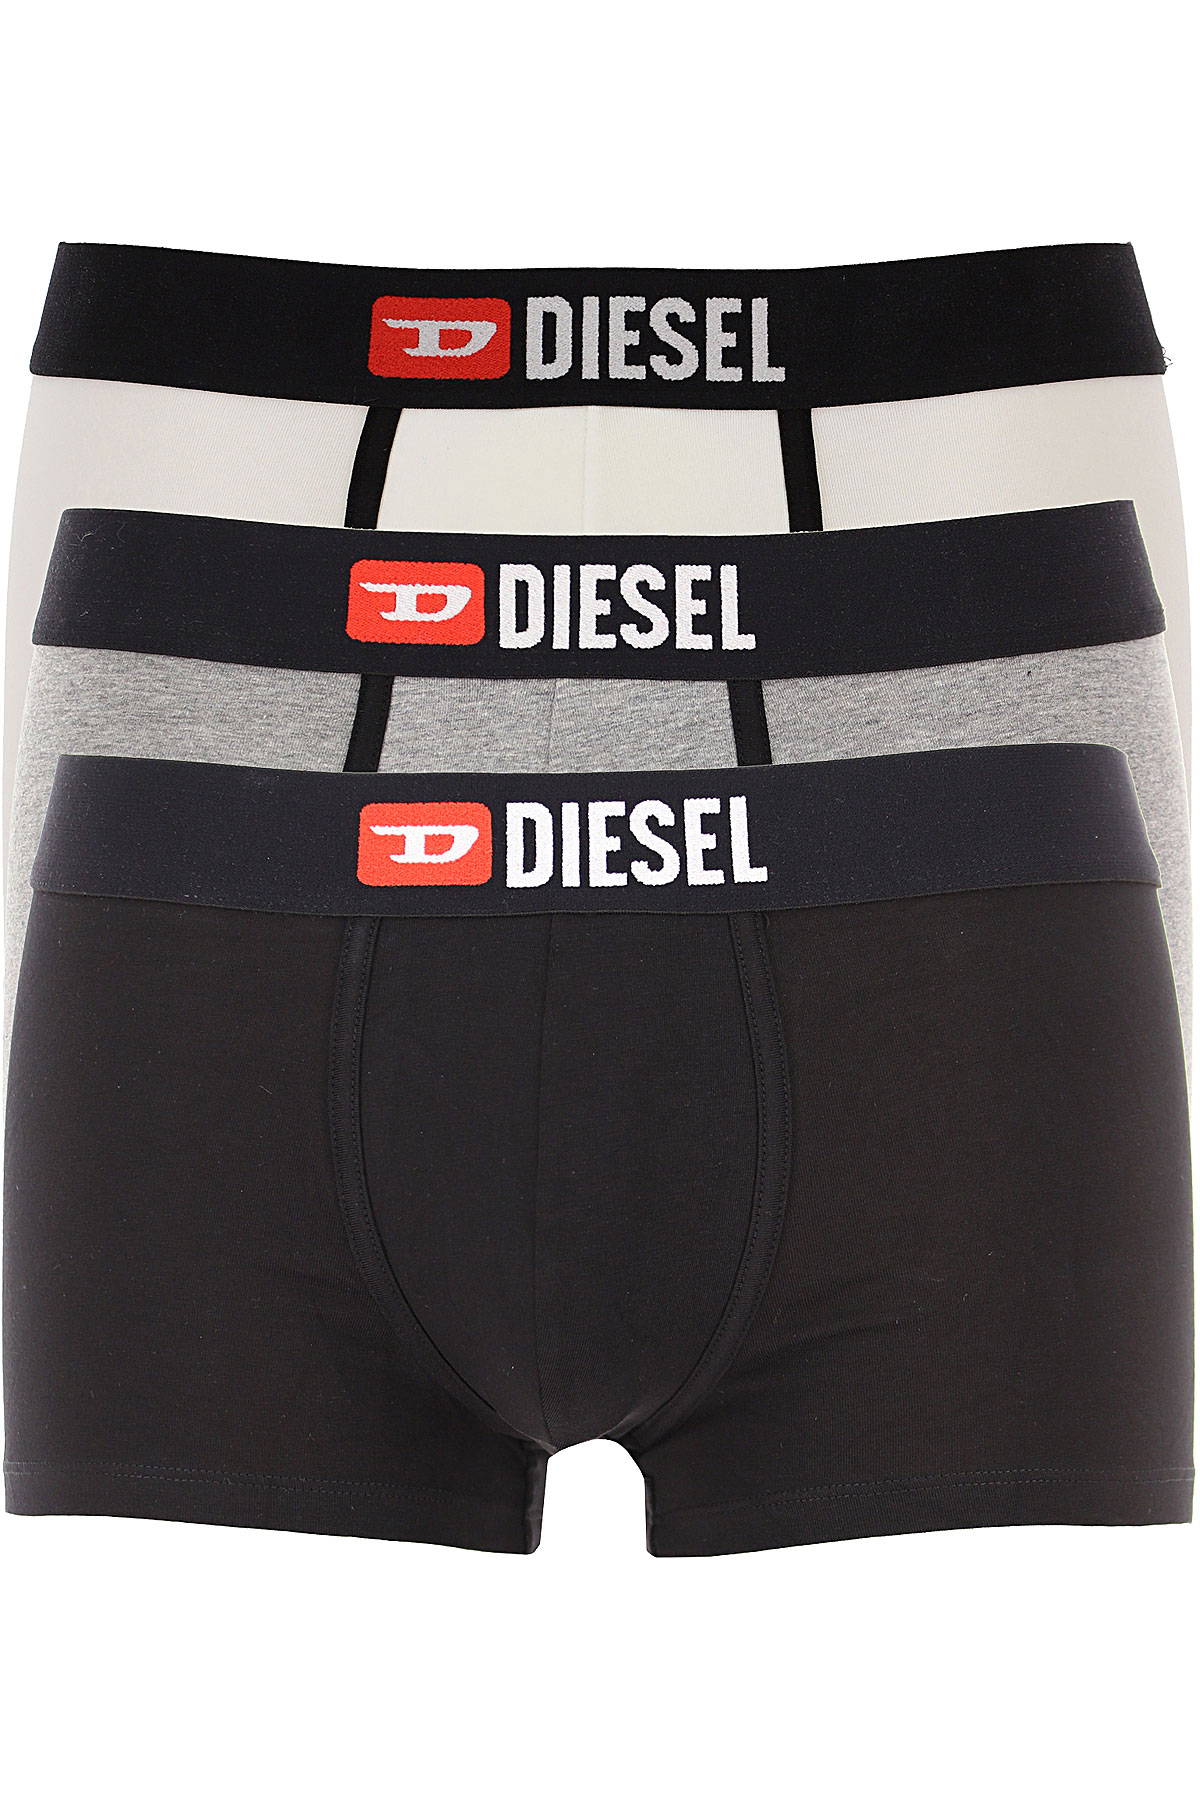 Mens Underwear Diesel, Style code: 00st3v-0wawd-e4157